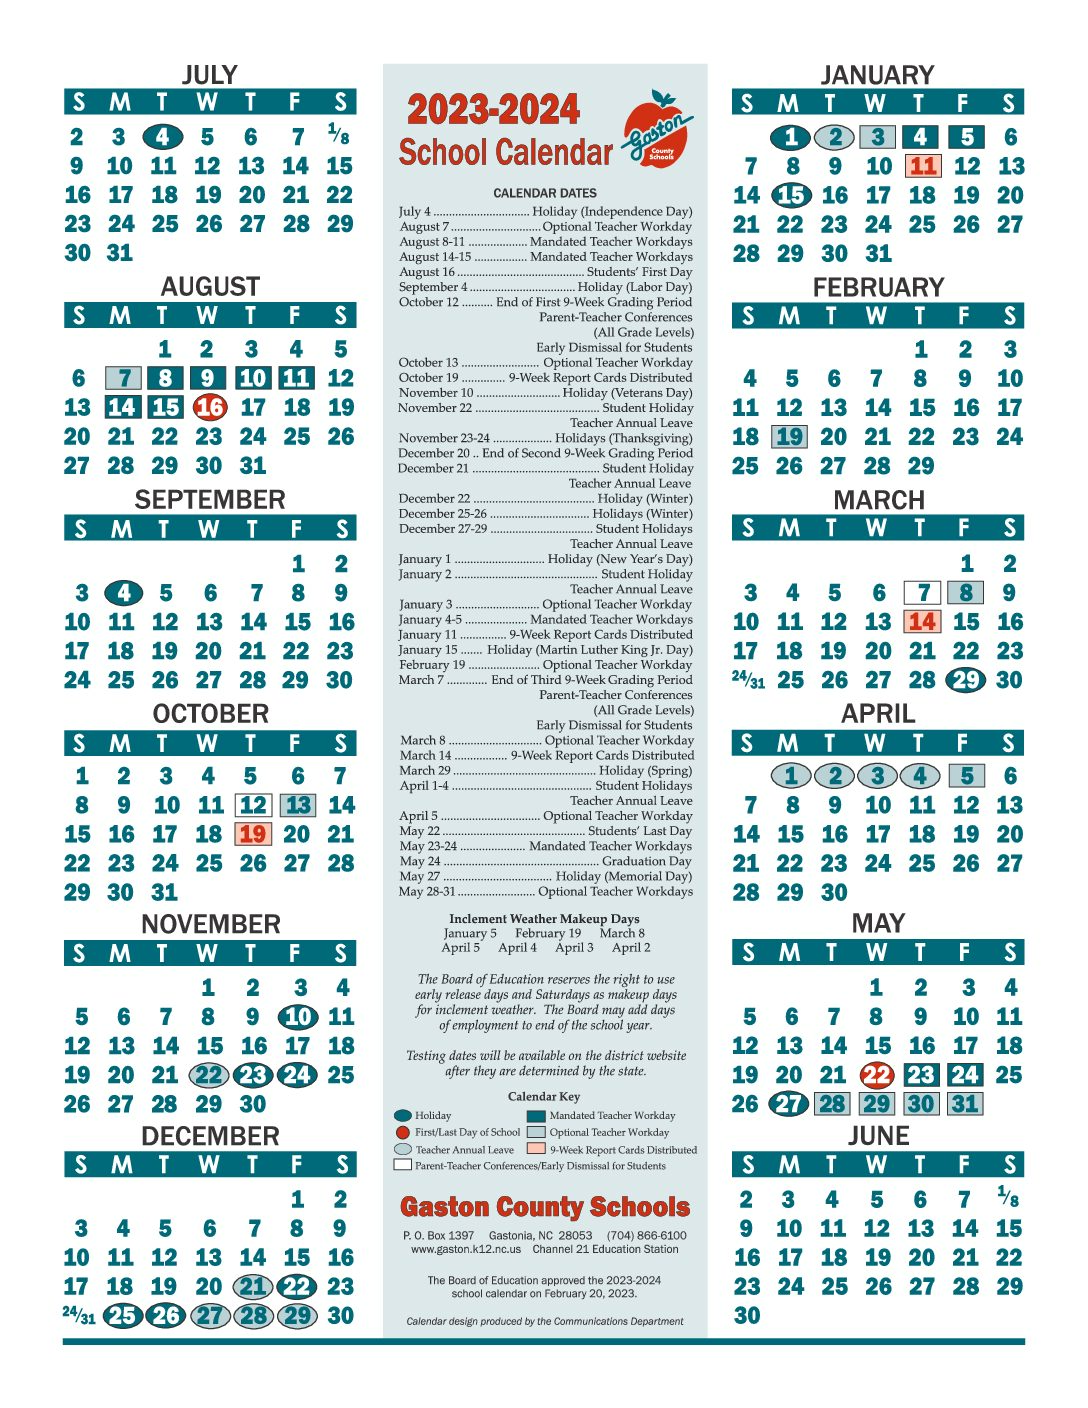 Gaston County Schools Calendar 2023-2024 in PDF